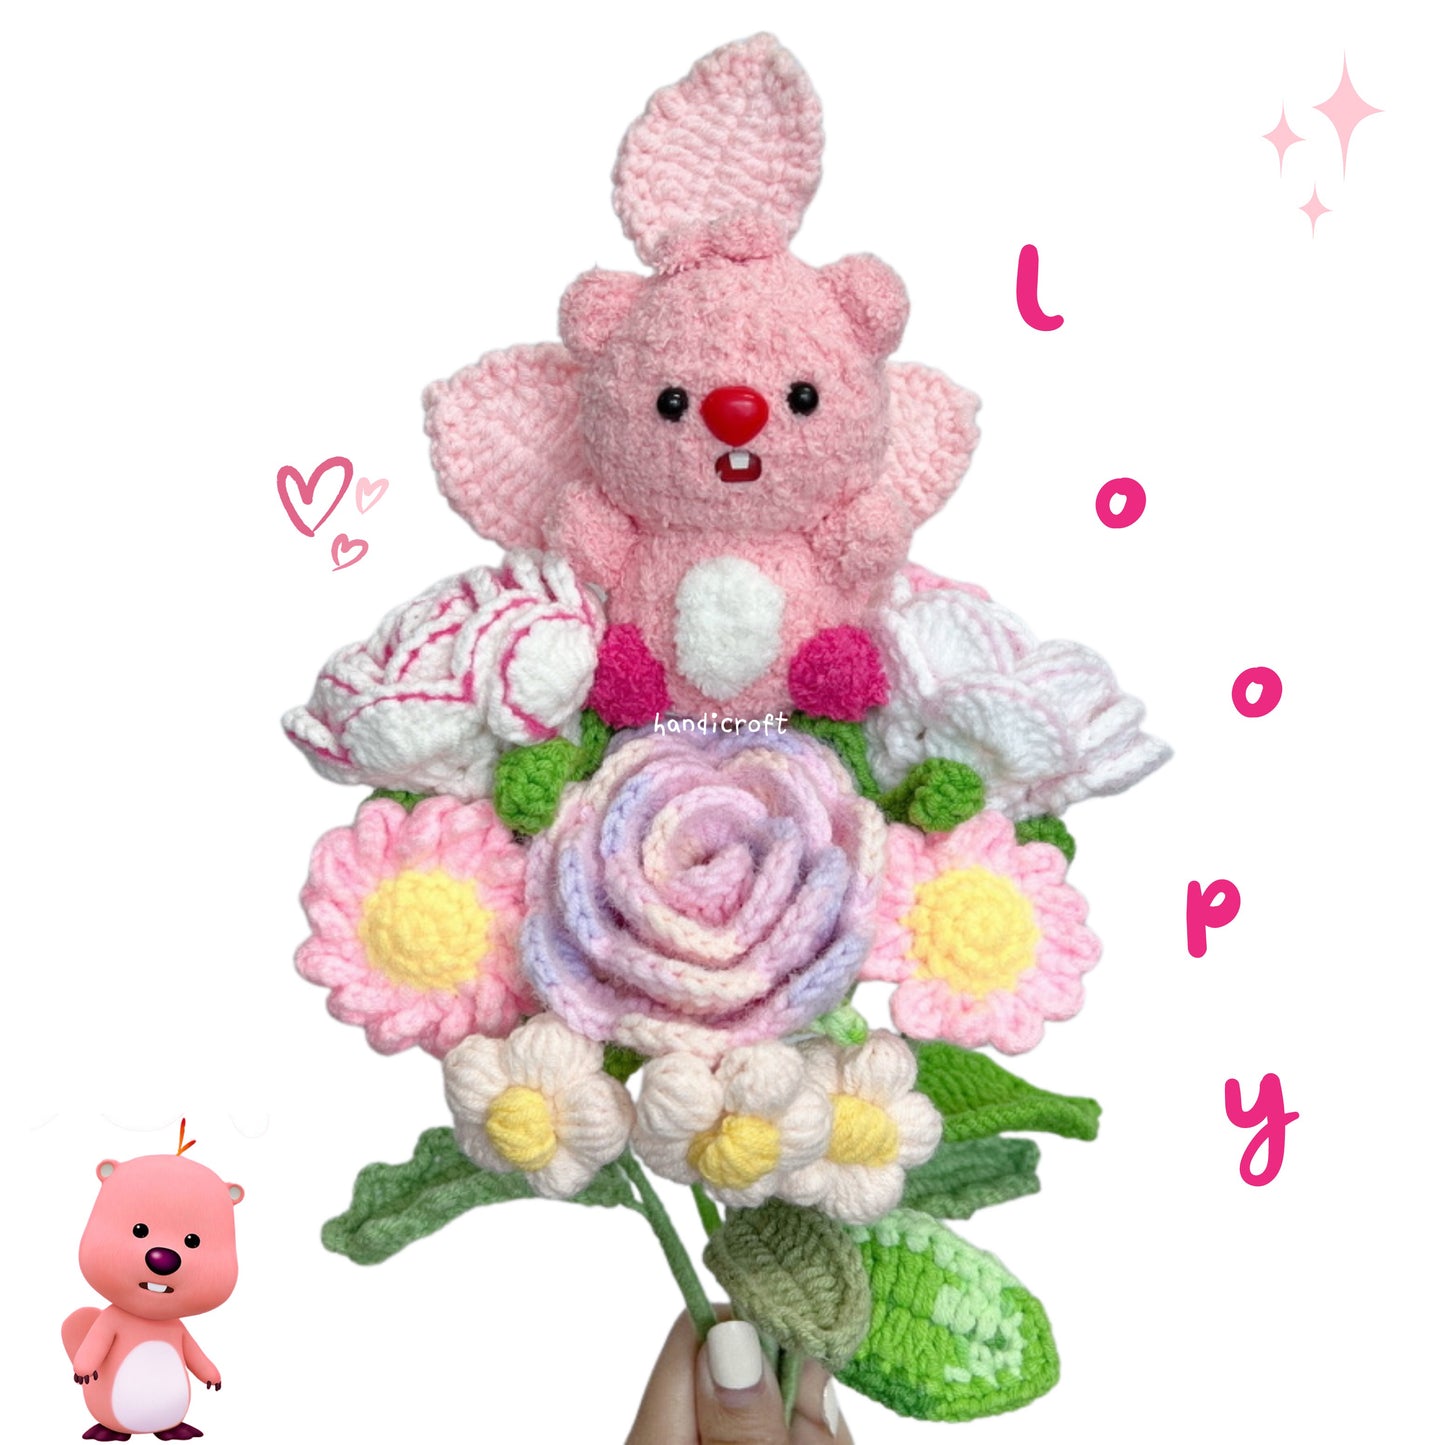 loopy love - handicroft special pink crochet flower bouquet ♡